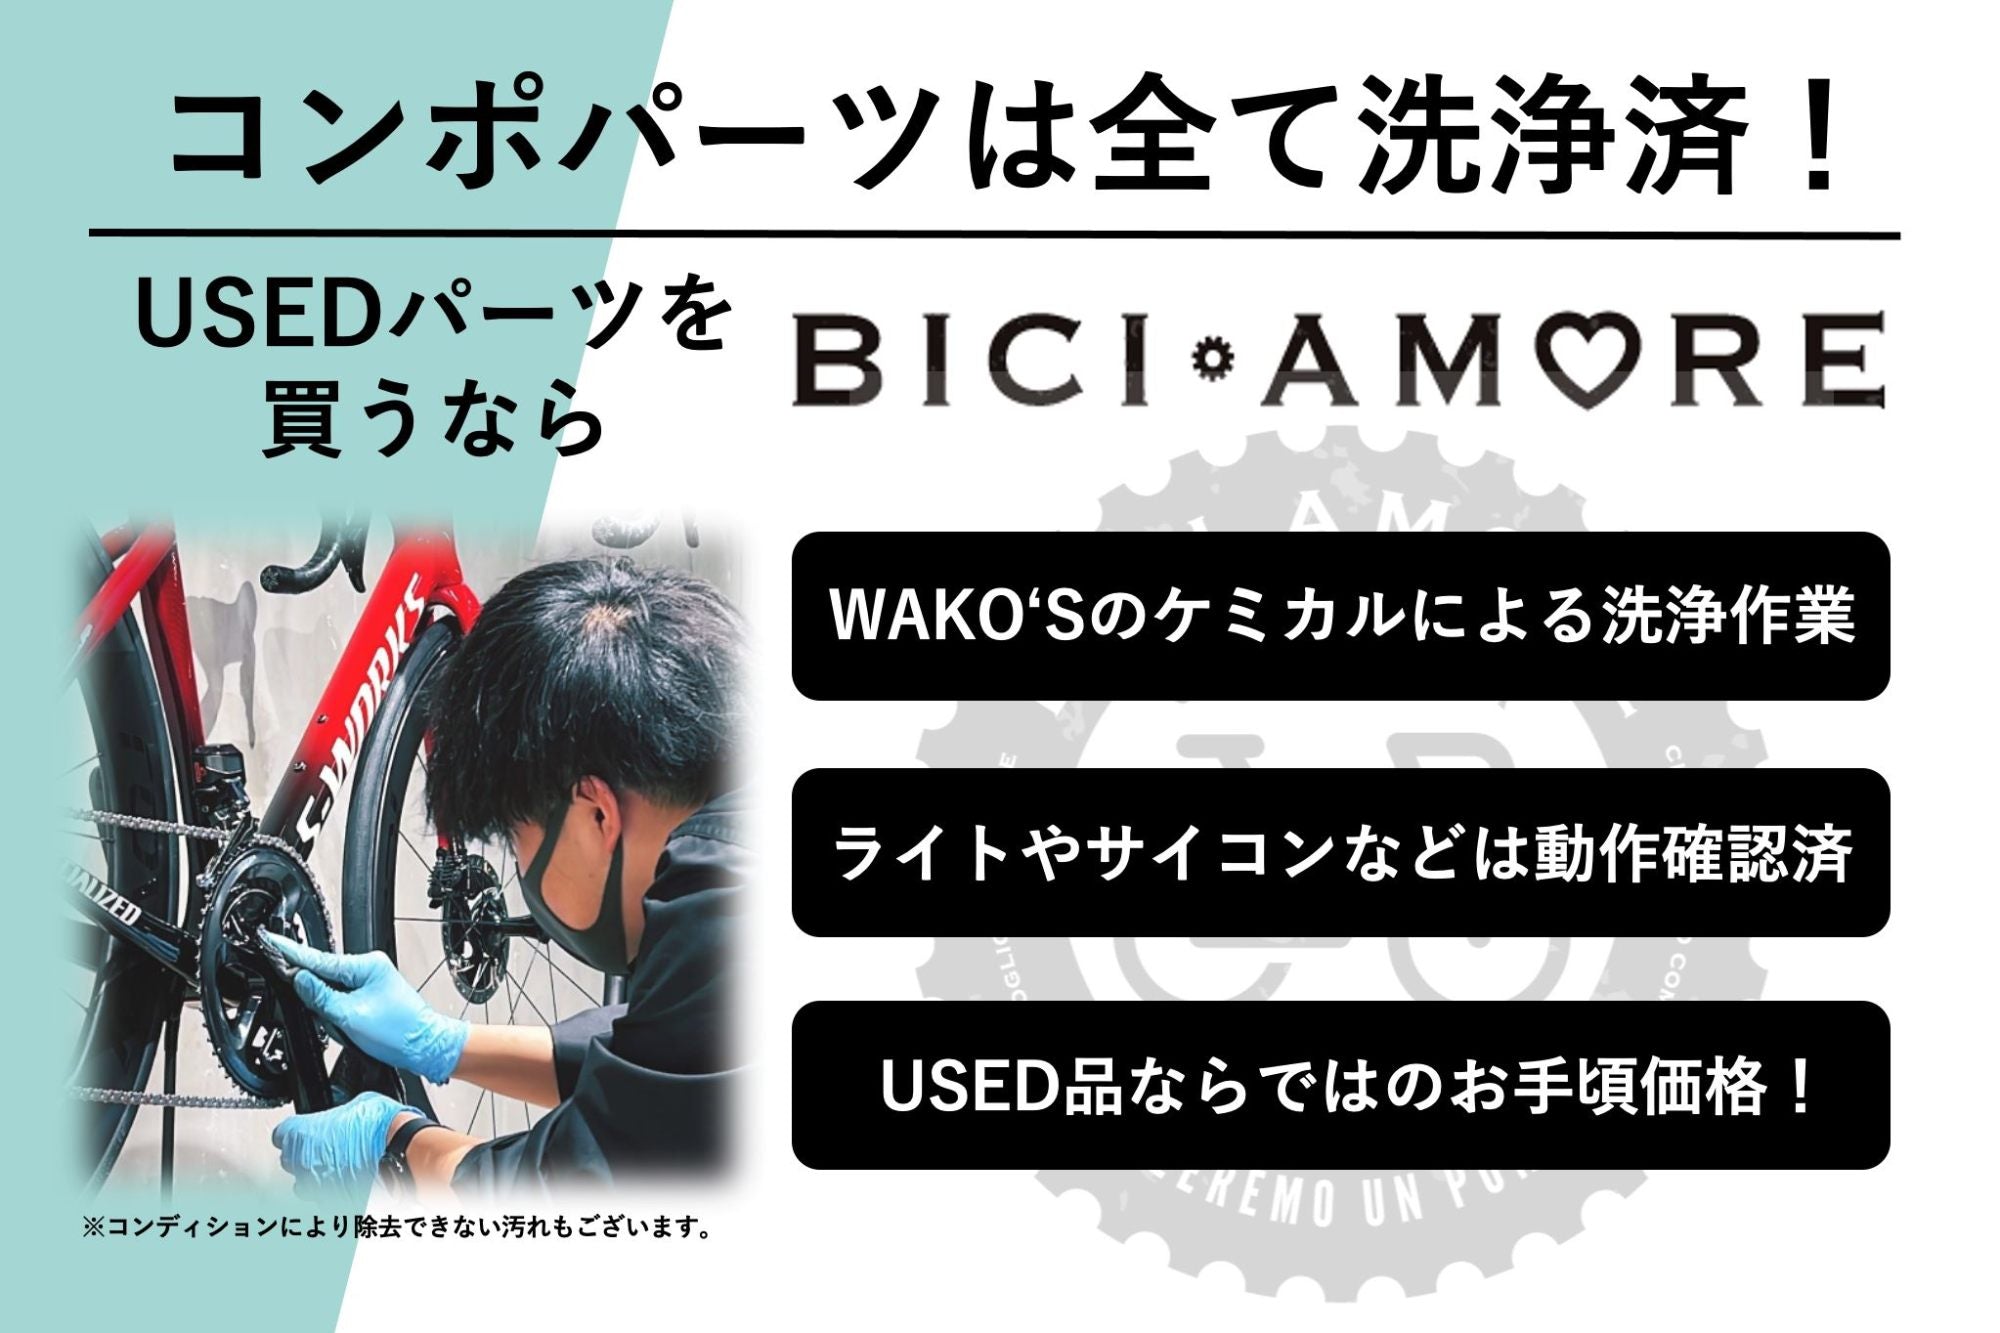 HO085 シマノ Shimano デュラエース DURA-ACE RD-9070 Di2 電動 リア 